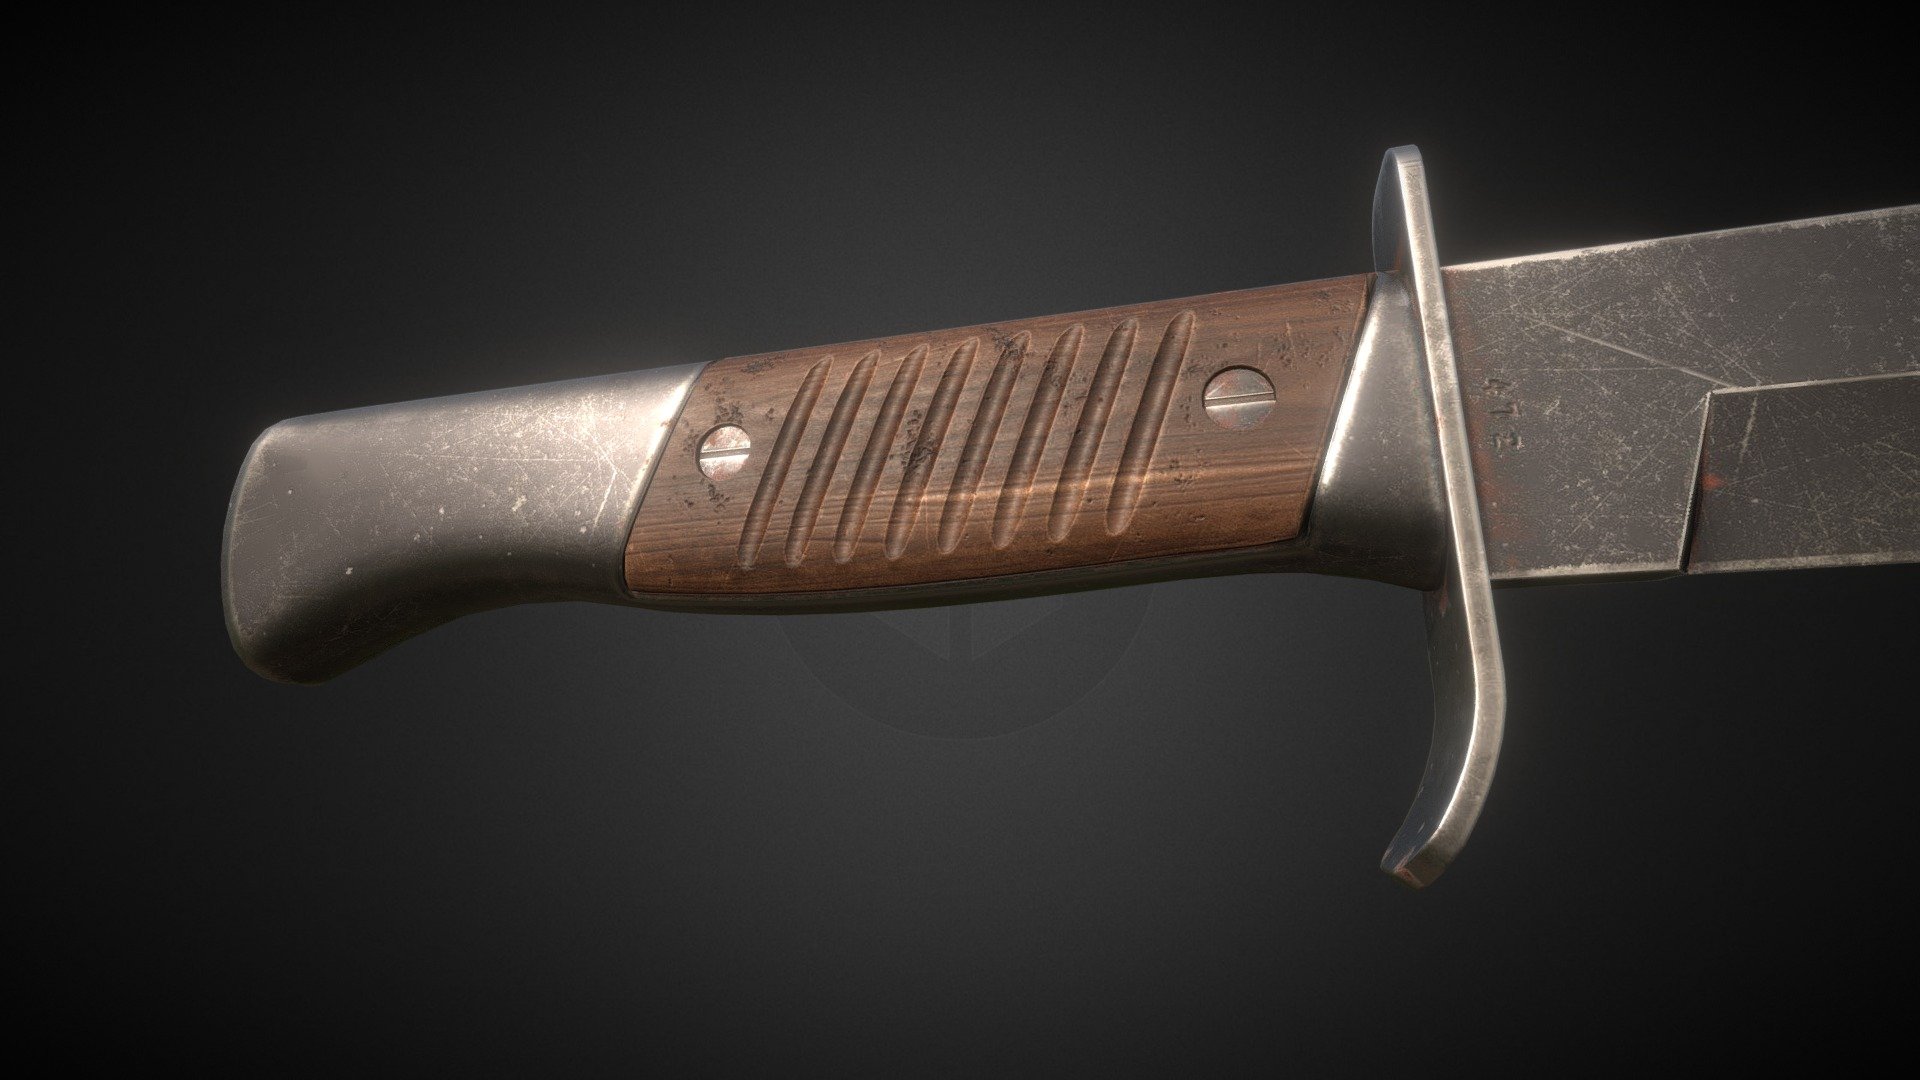 German WW2 knife concept